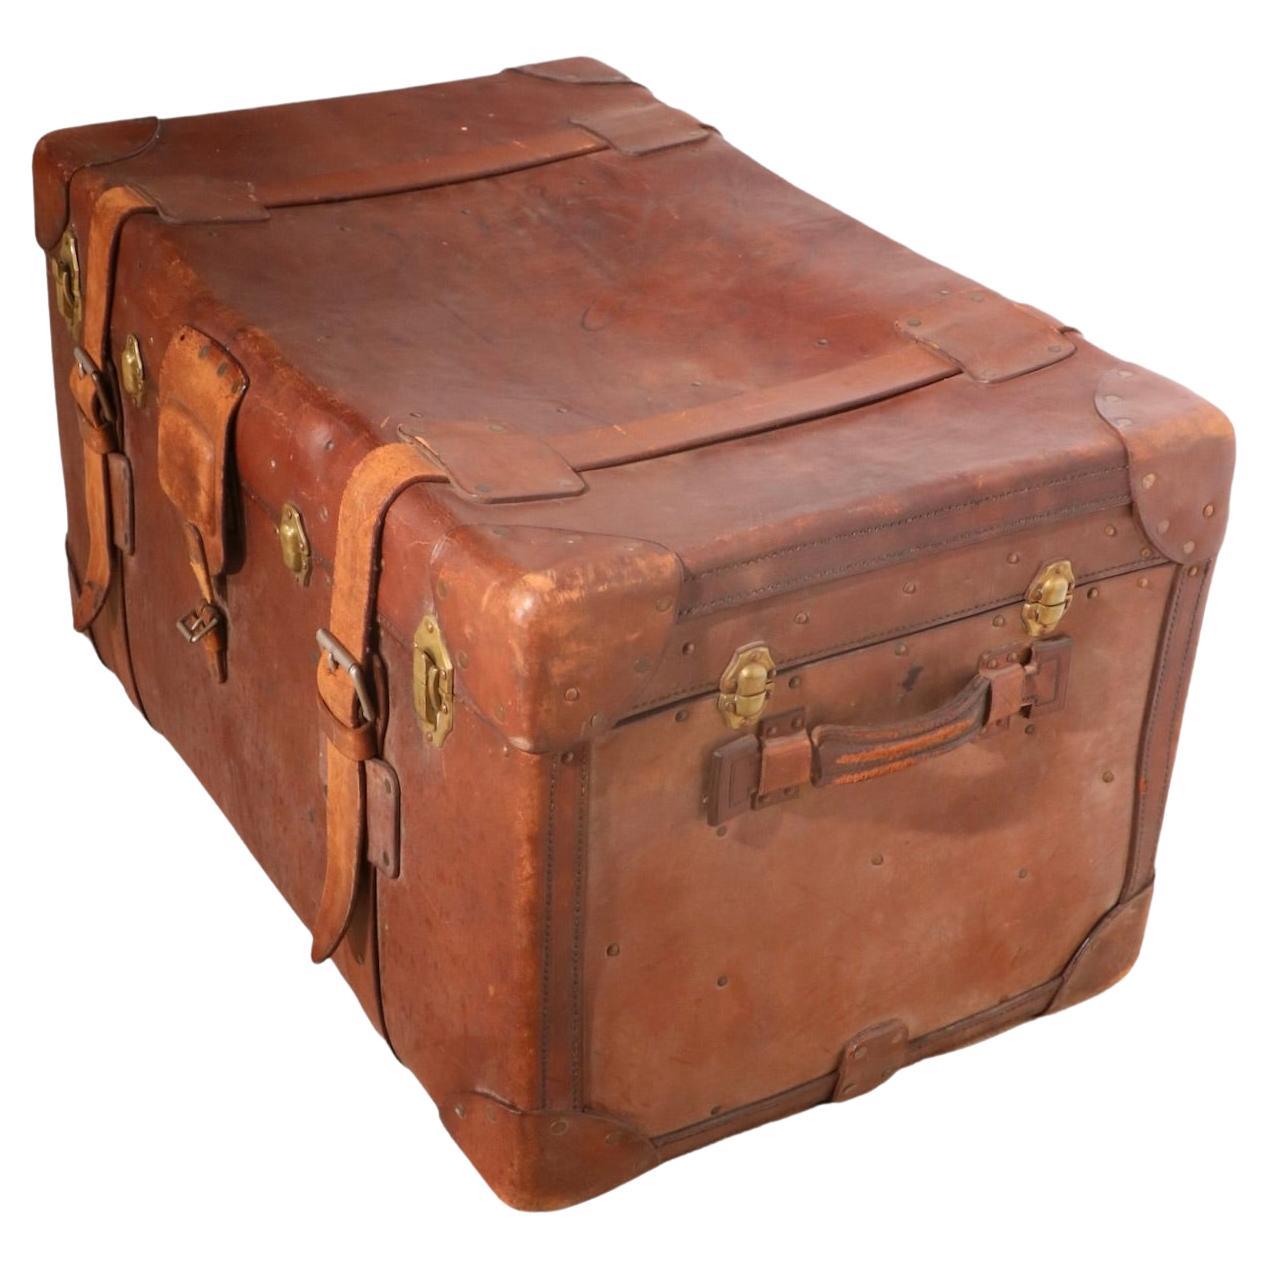 Details about   Vintage Suitcase Trunk Train 10" Wood and Leather Retro Antique Decorative Chest 